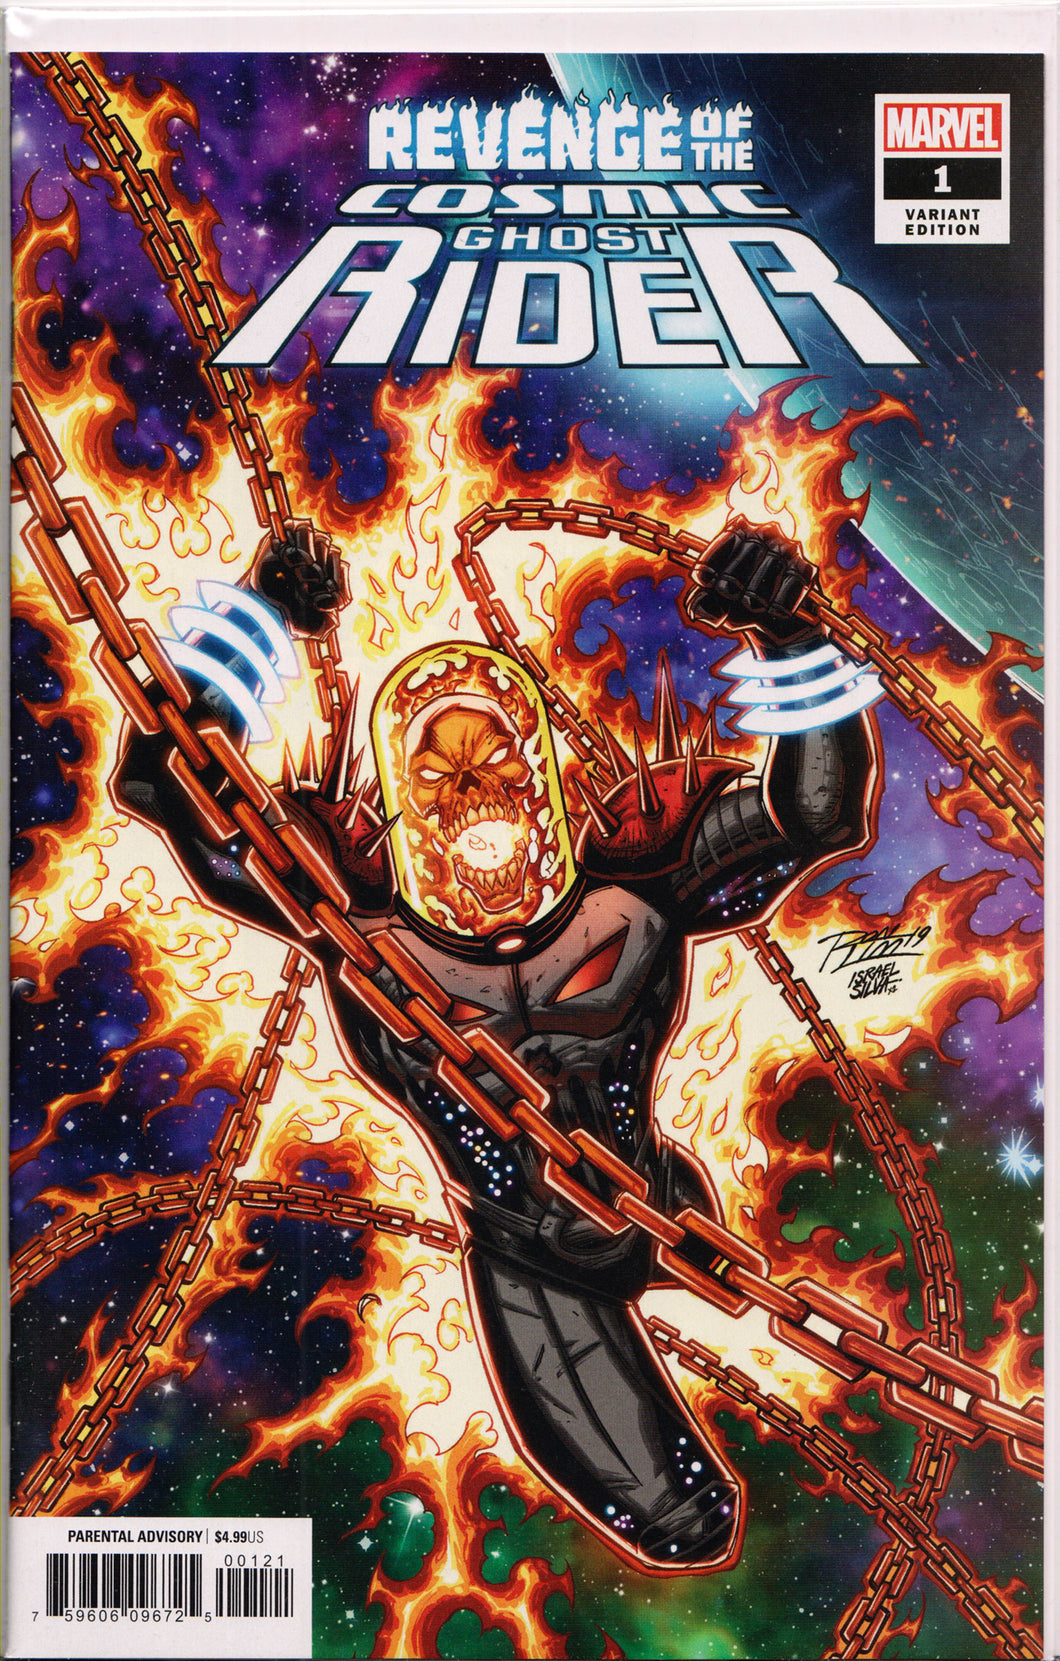 REVENGE OF THE COSMIC GHOST RIDER #1 (RON LIM VARIANT) COMIC BOOK ~ Marvel Comics